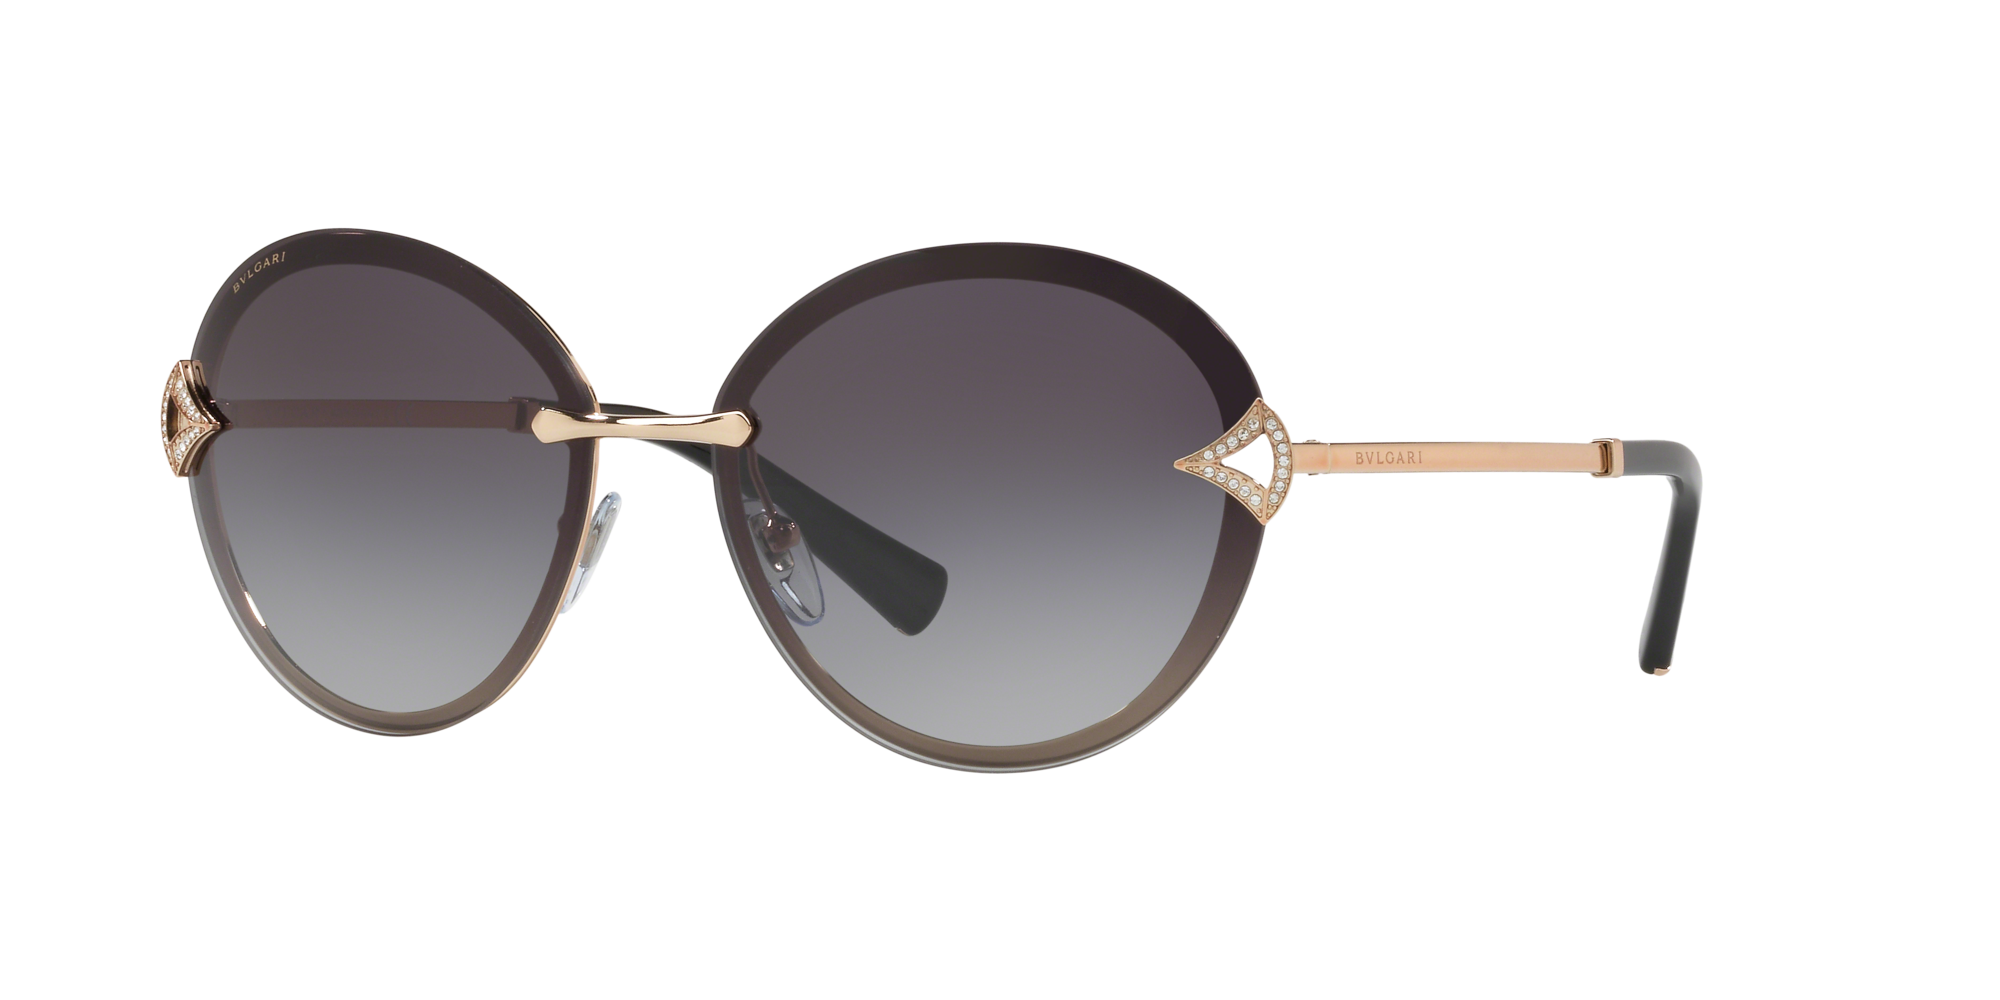 bvlgari sunglasses sale online